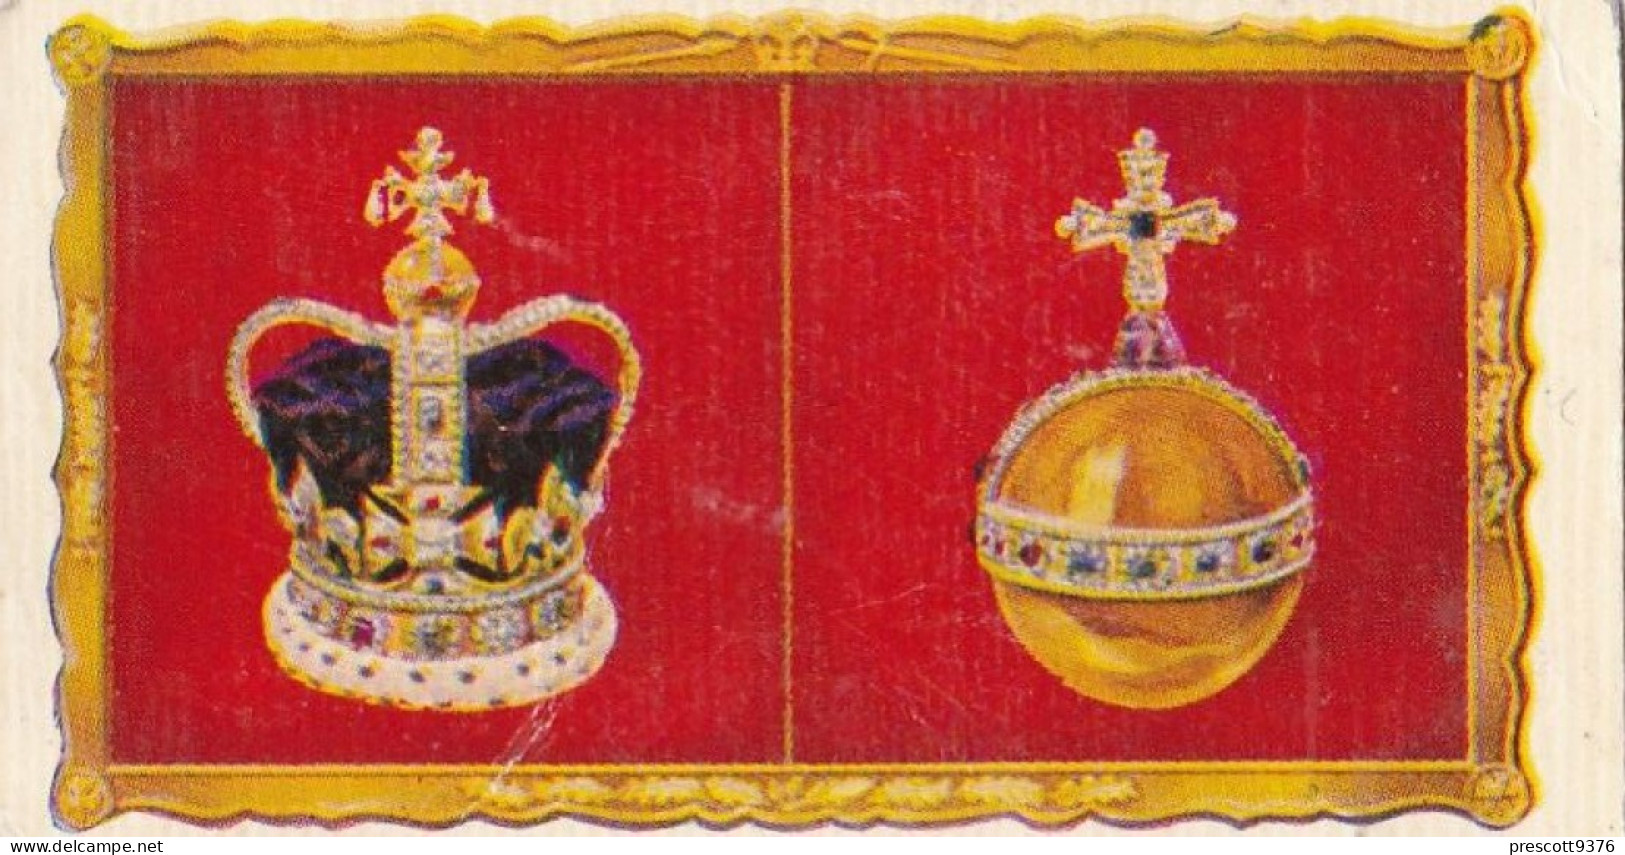 39 Kings Orb & St Edwards Crown  - Coronation 1937- Kensitas Cigarette Card - 3x6cm, Royalty - Churchman